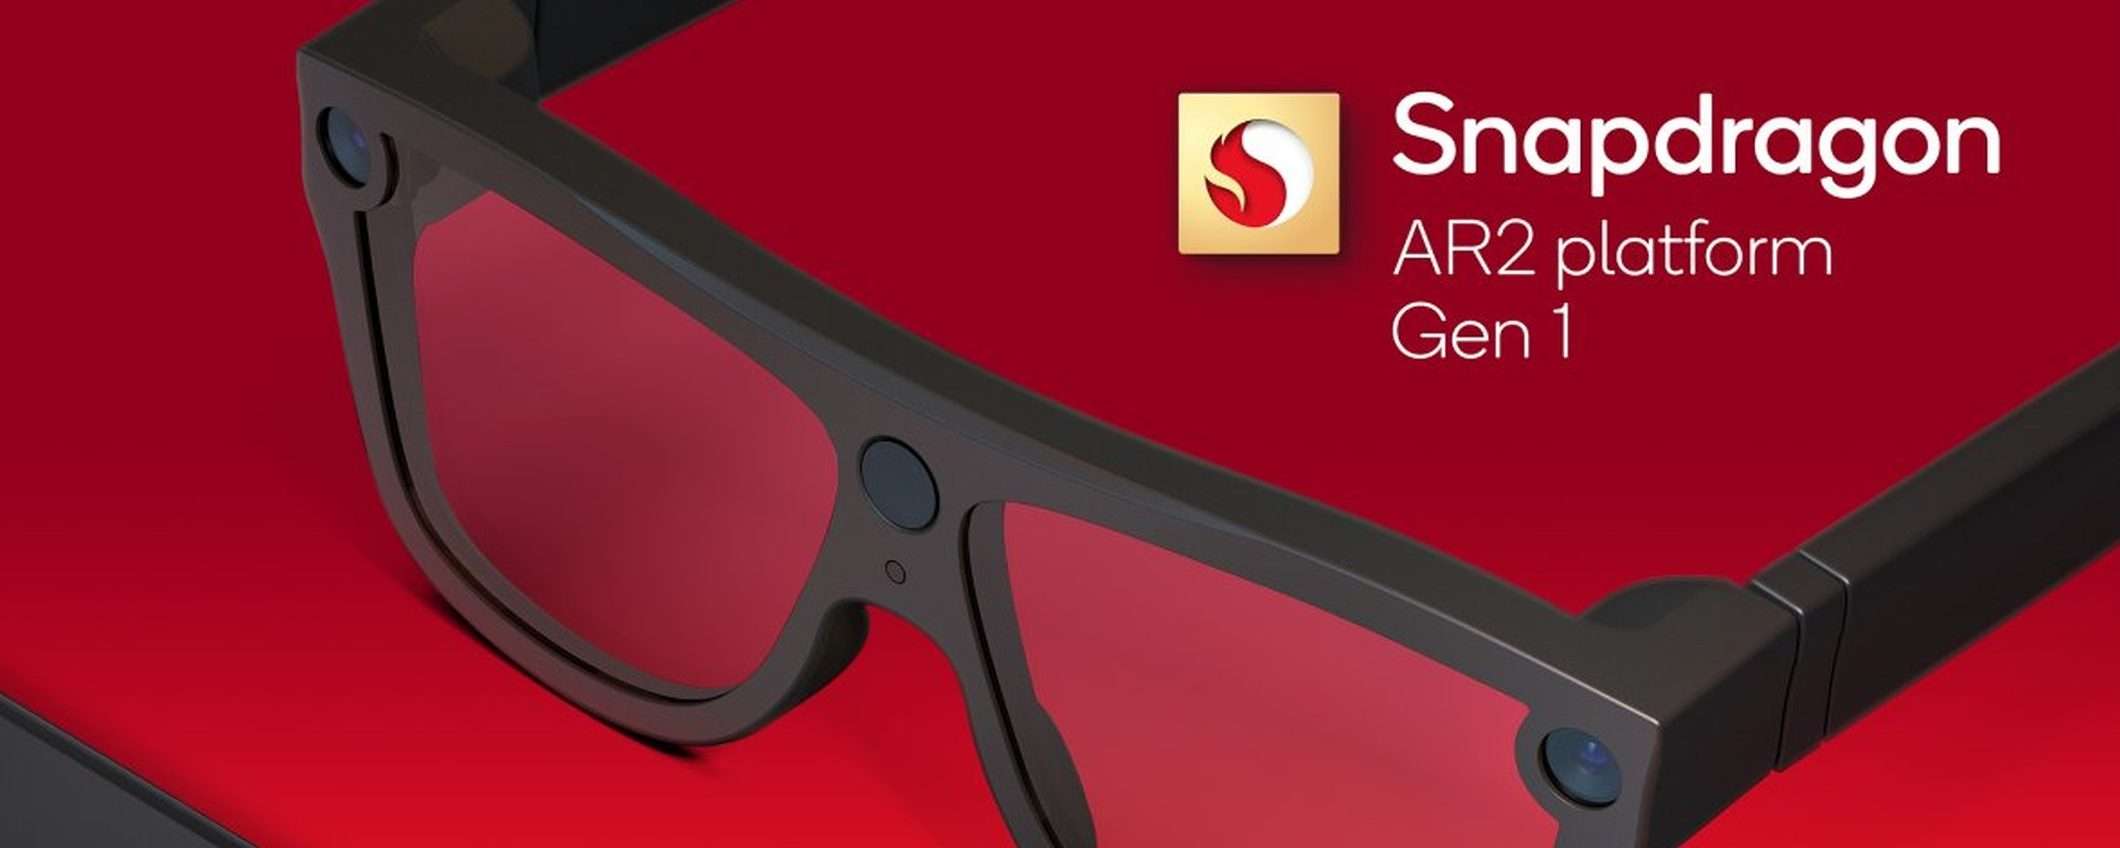 Snapdragon AR2 per occhiali AR e Oryon per PC